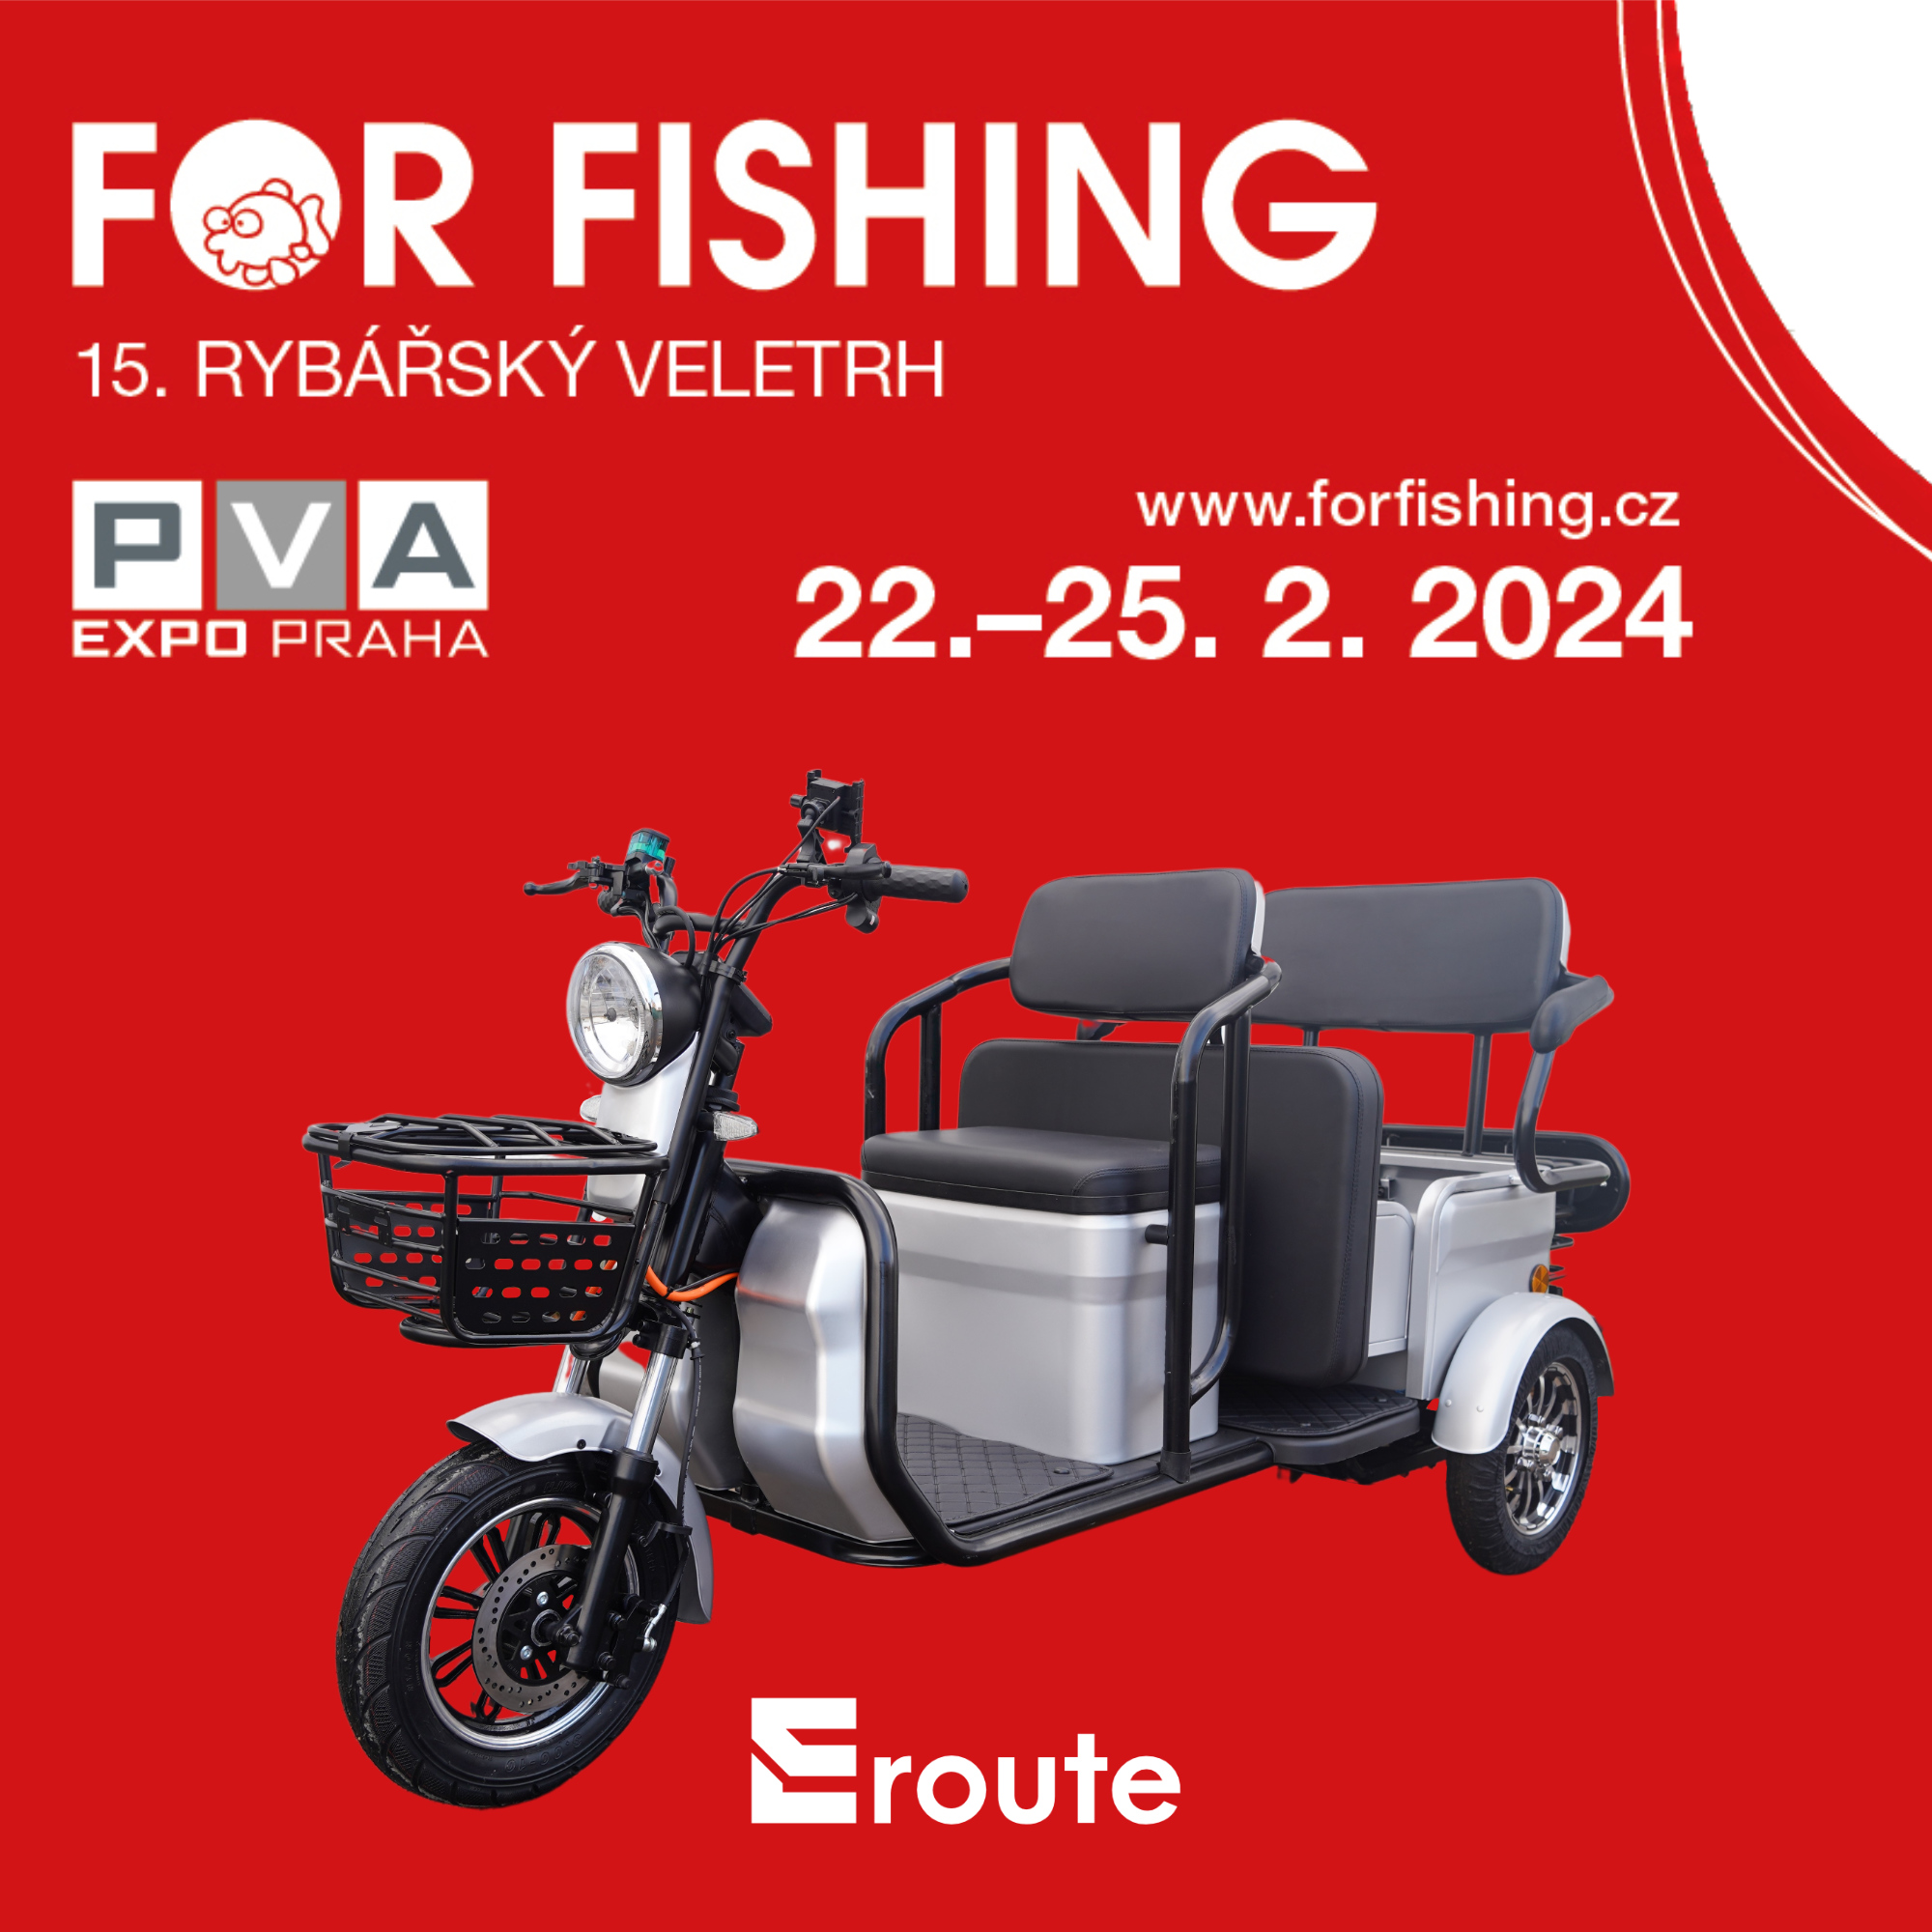 Vyhrajte volné vstupenky na veletrh FOR FISHING s Eroute!